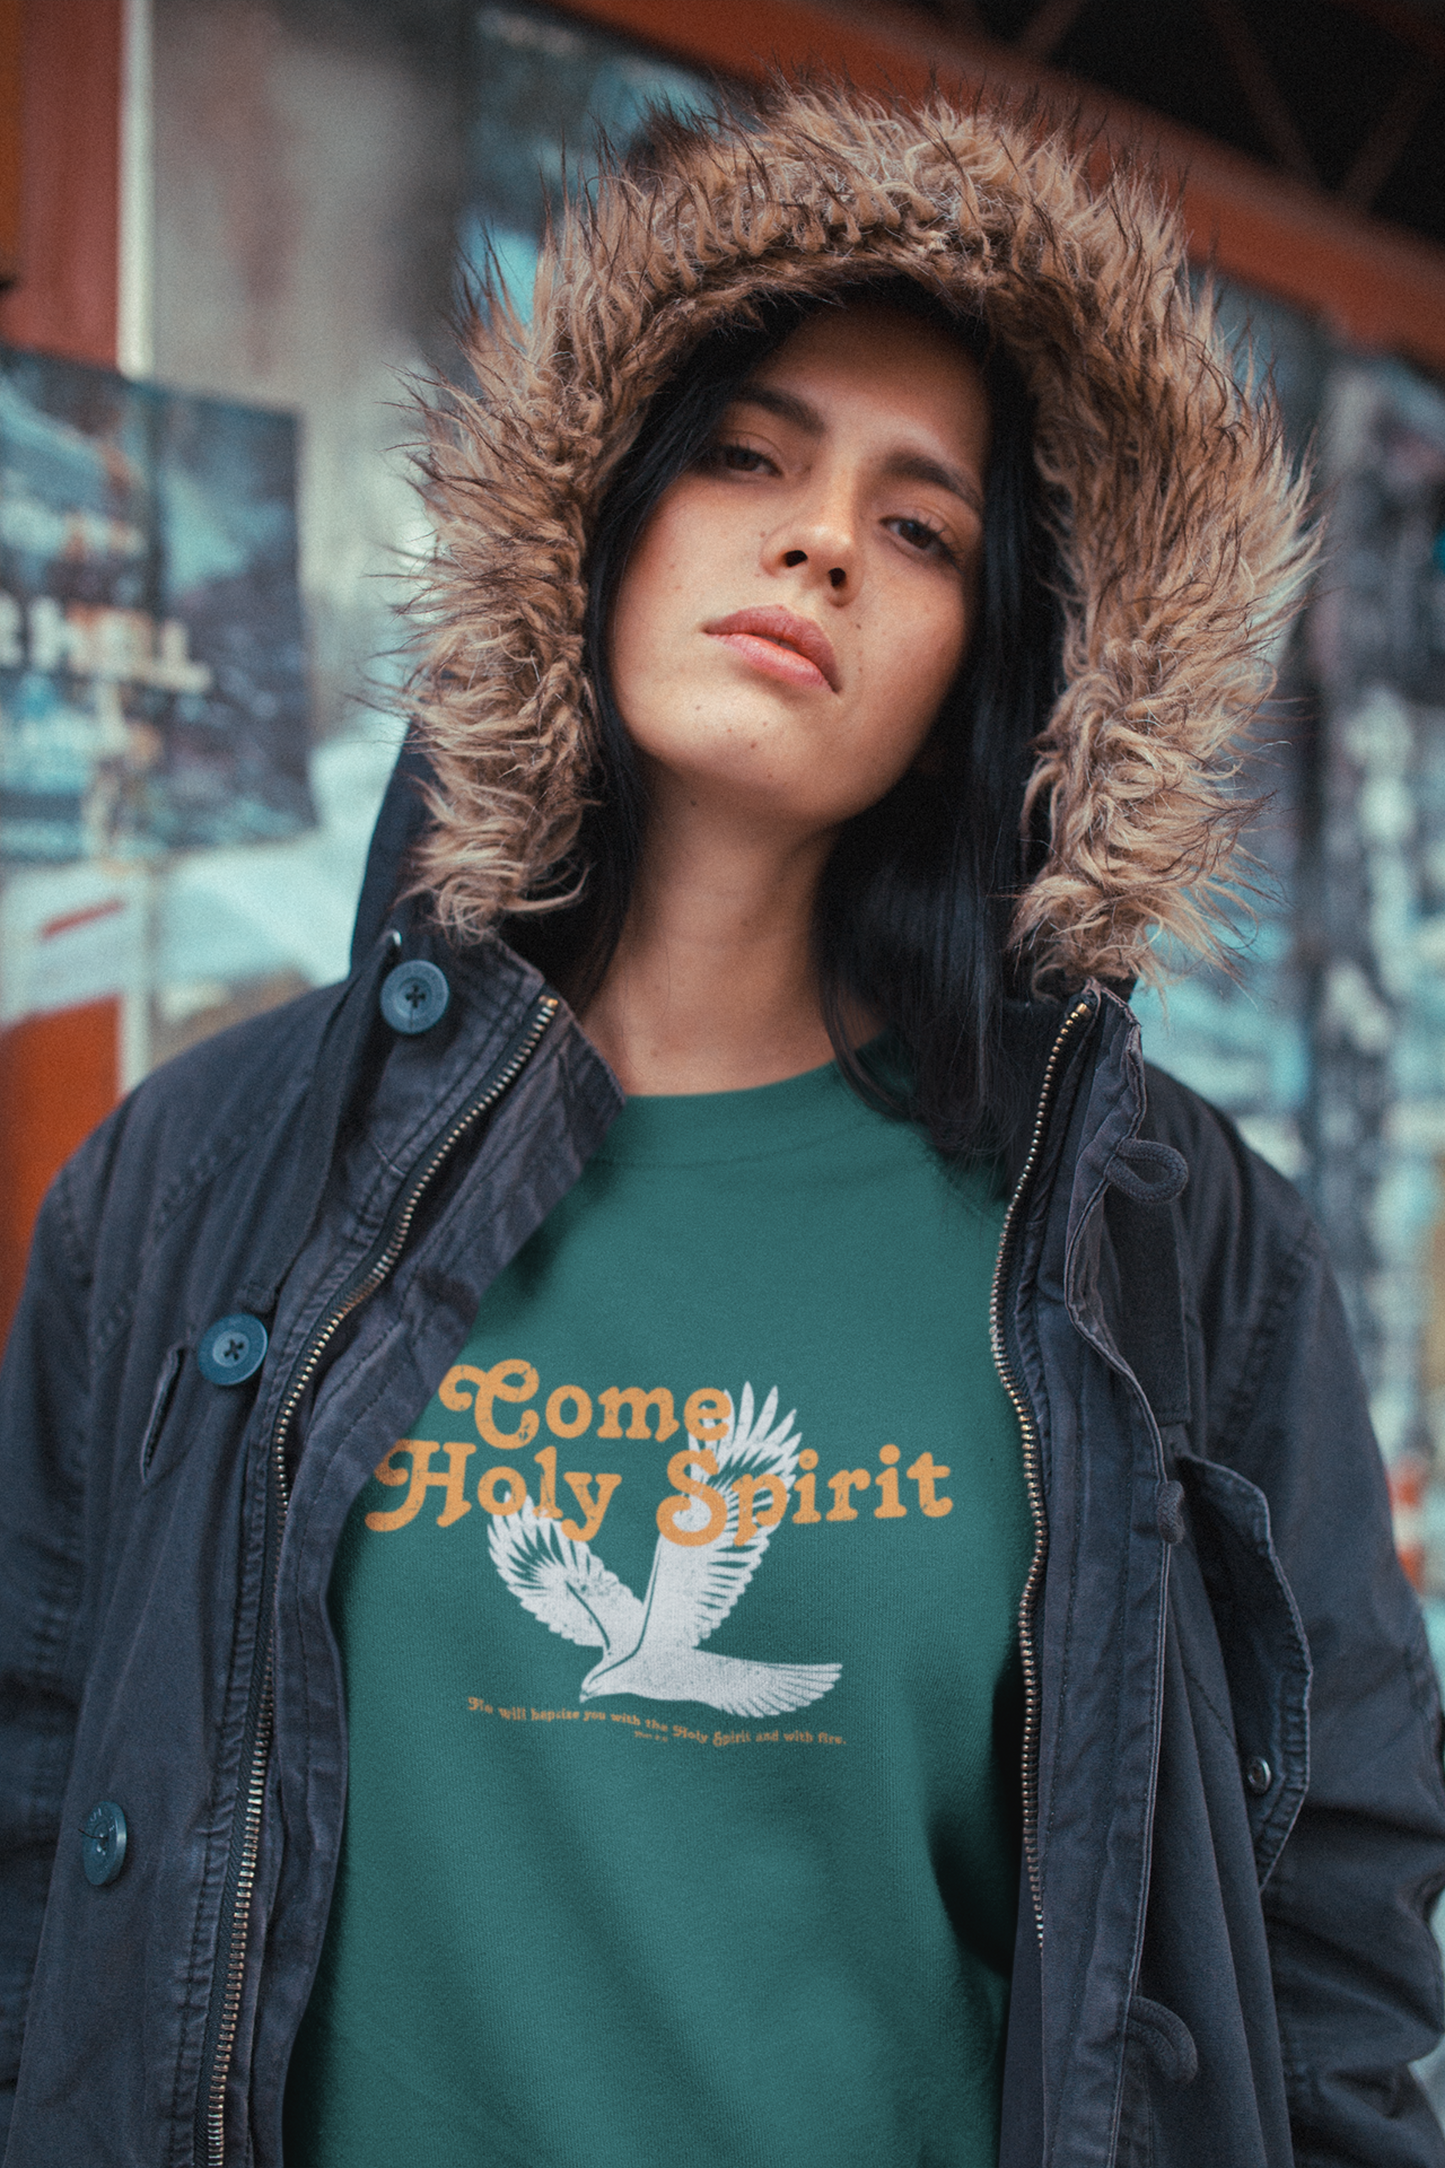 Come Holy Spirit. Sweatshirt.